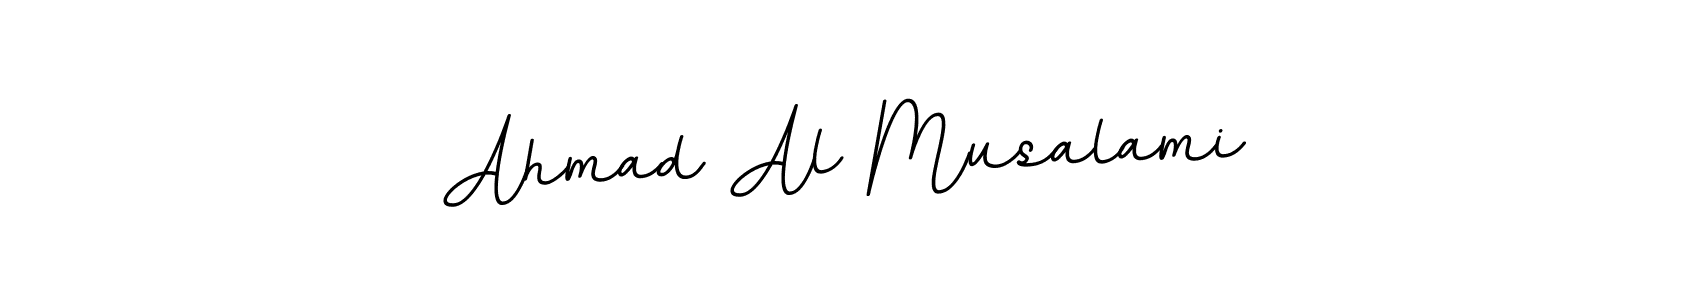 How to Draw Ahmad Al Musalami signature style? BallpointsItalic-DORy9 is a latest design signature styles for name Ahmad Al Musalami. Ahmad Al Musalami signature style 11 images and pictures png